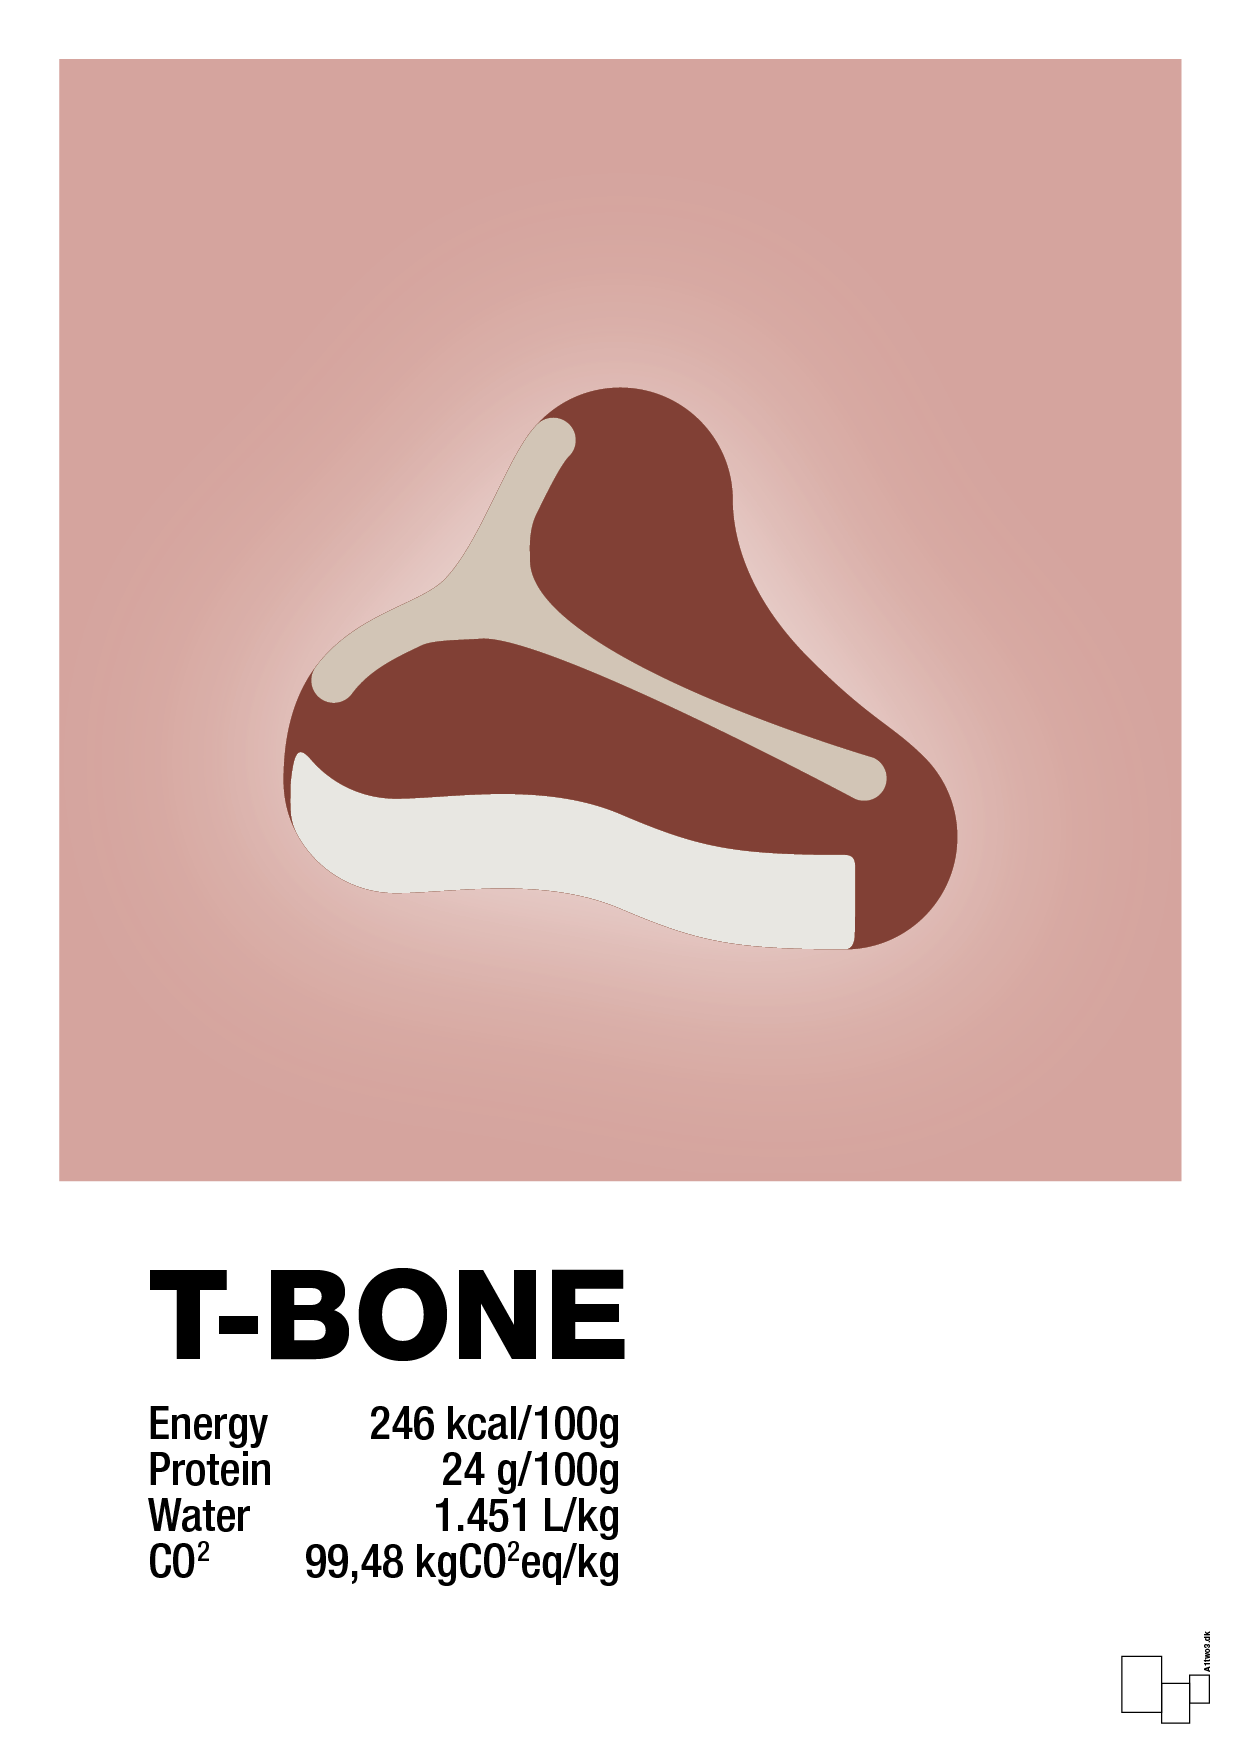 t-bone nutrition og miljø - Plakat med Mad & Drikke i Bubble Shell